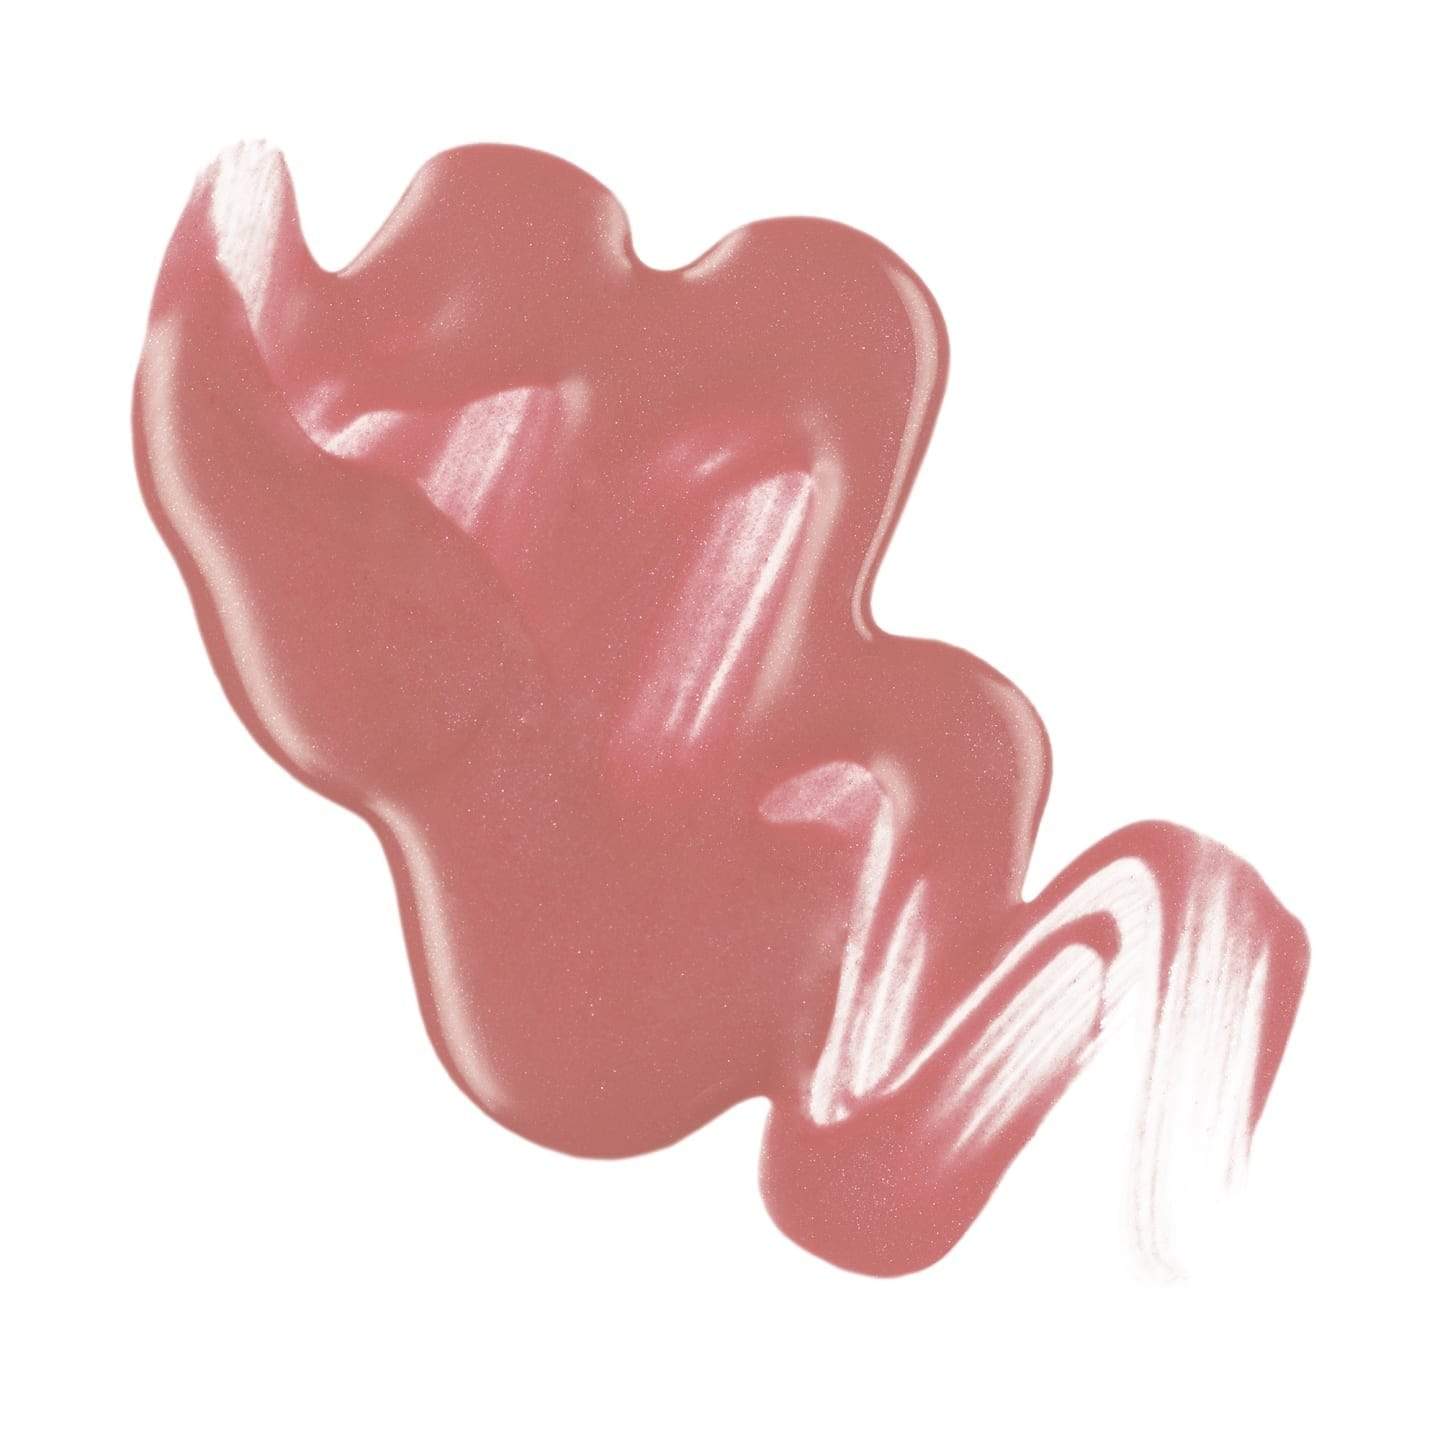 Lipfinity 24 Hr Lip Colour | Max Factor - Give Us Beauty